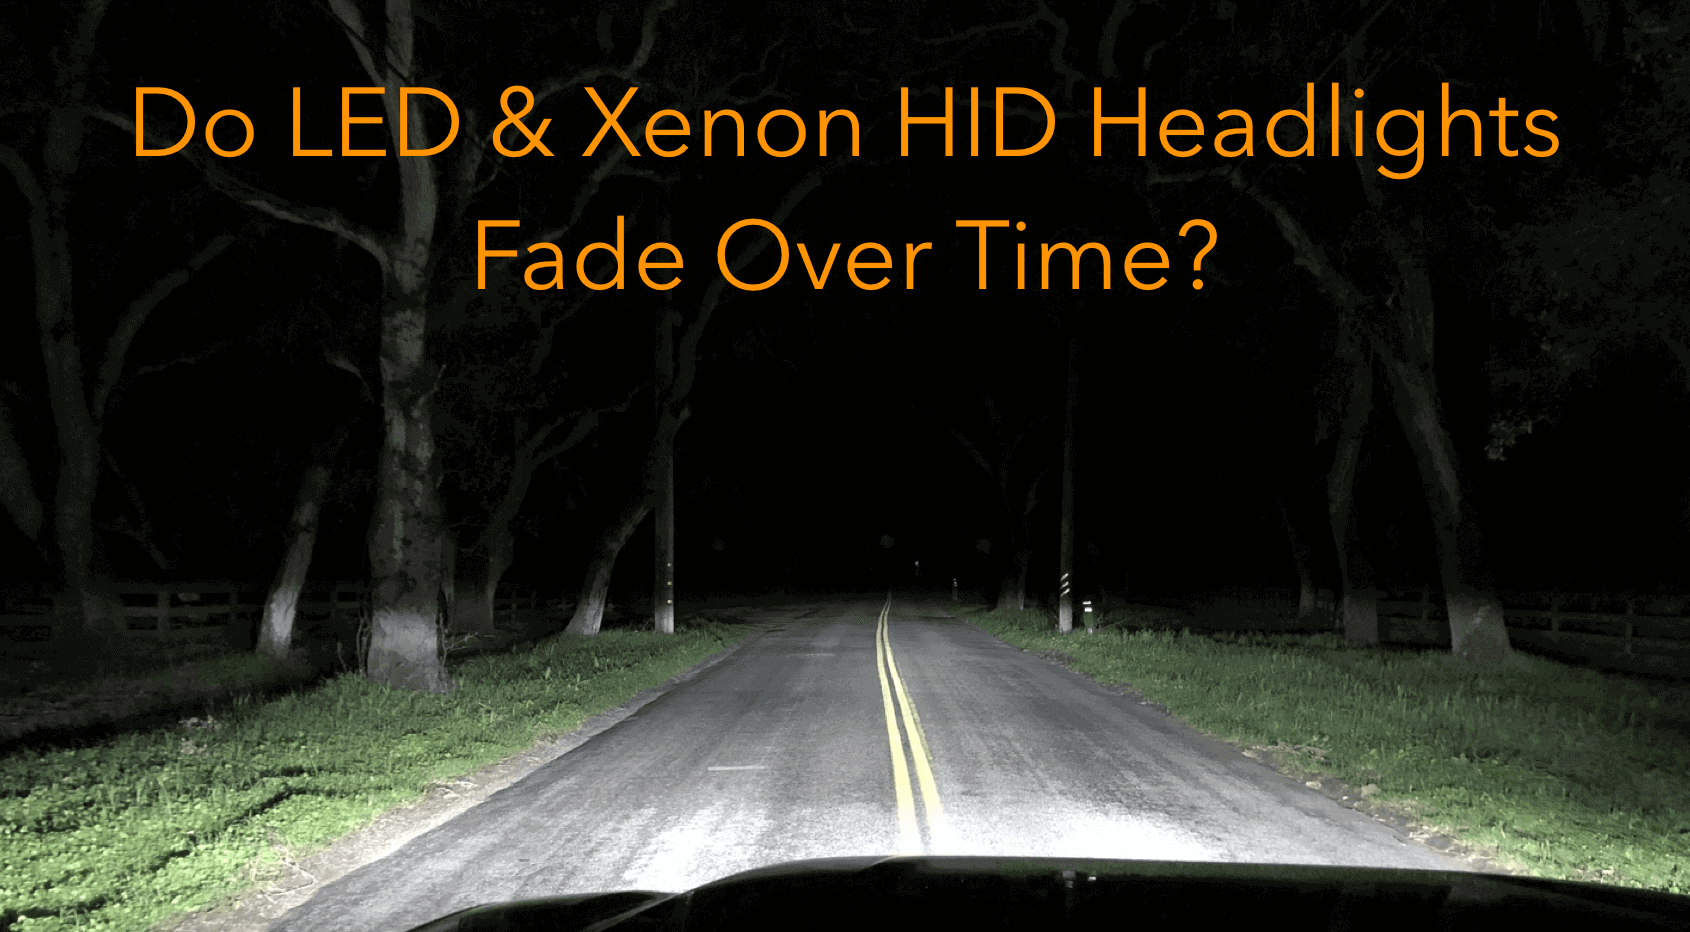 XenonPro - Do LED & Xenon HID Headlights Fade Over Time?